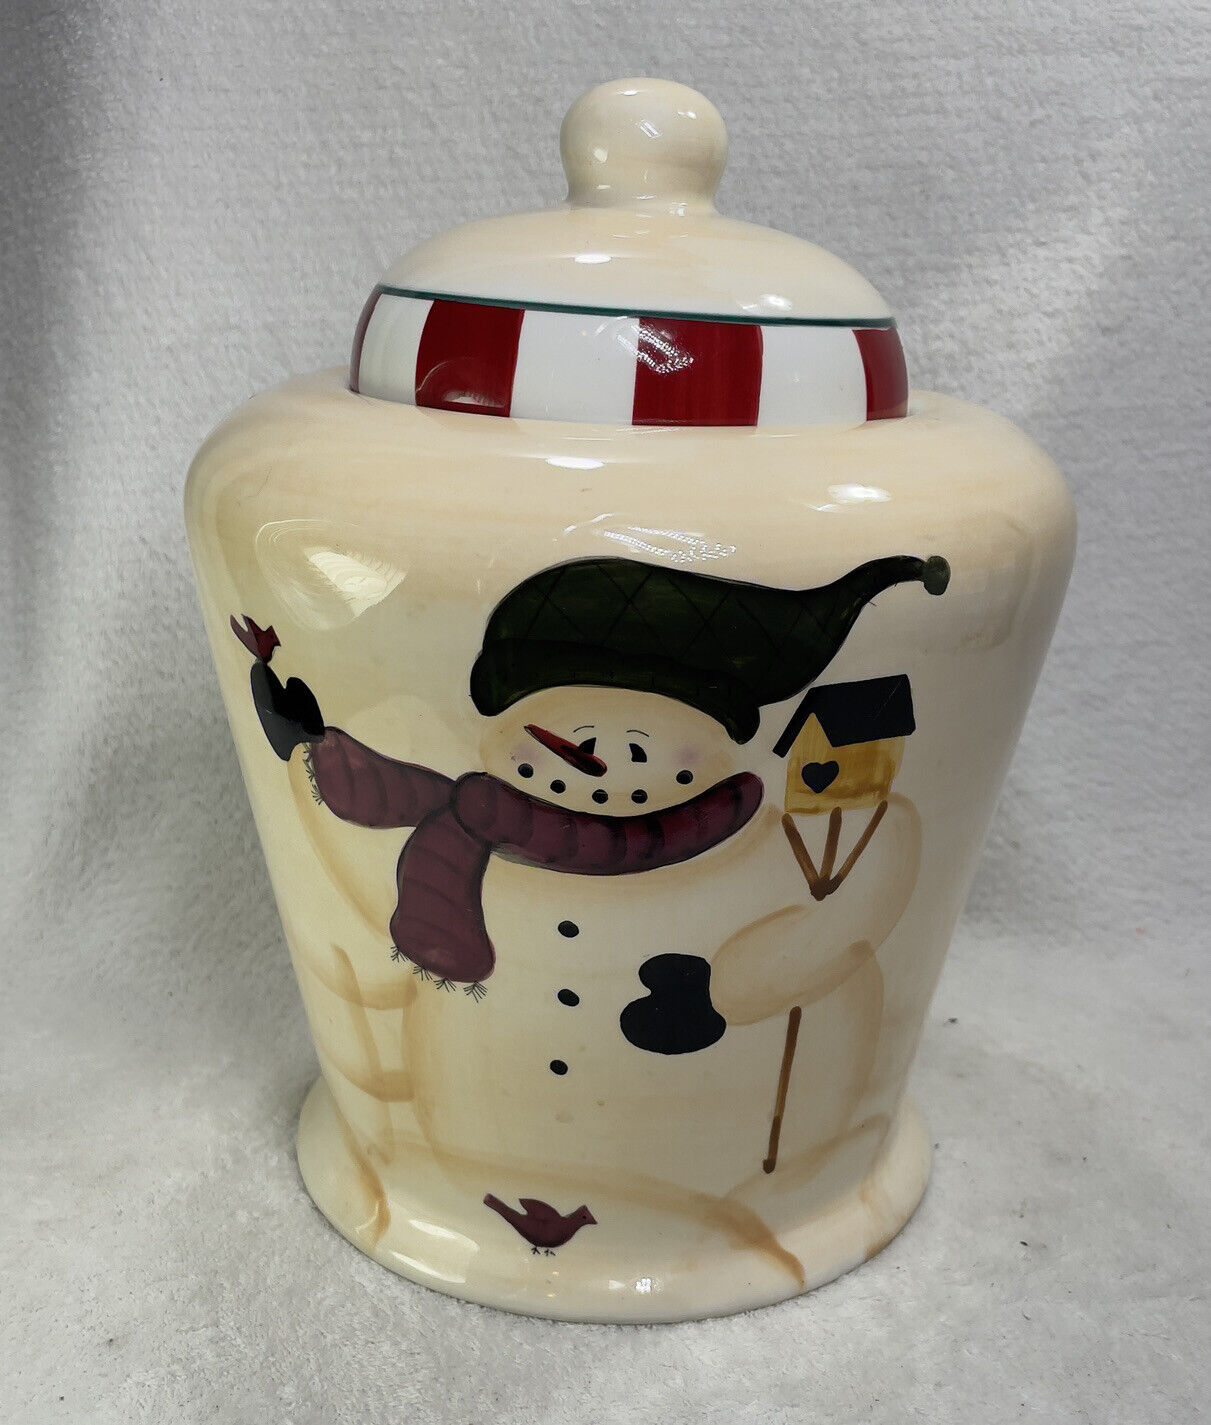 Crazy Mountain Snowman with Bird Cookie Jar